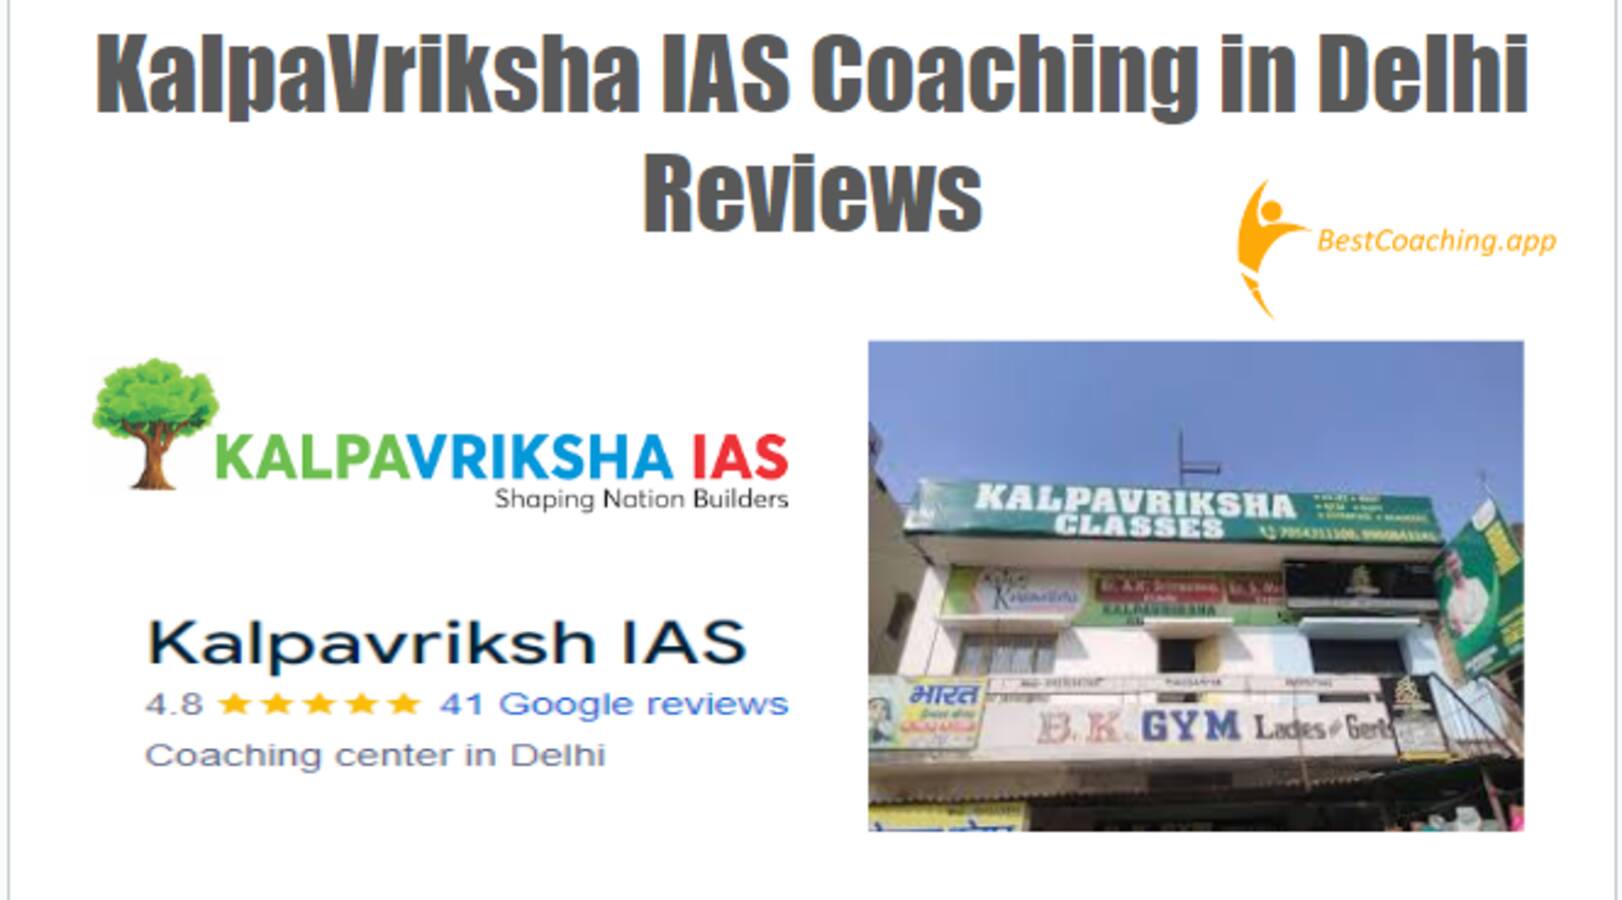 KalpaVriksha IAS Coaching in Delhi Reviews